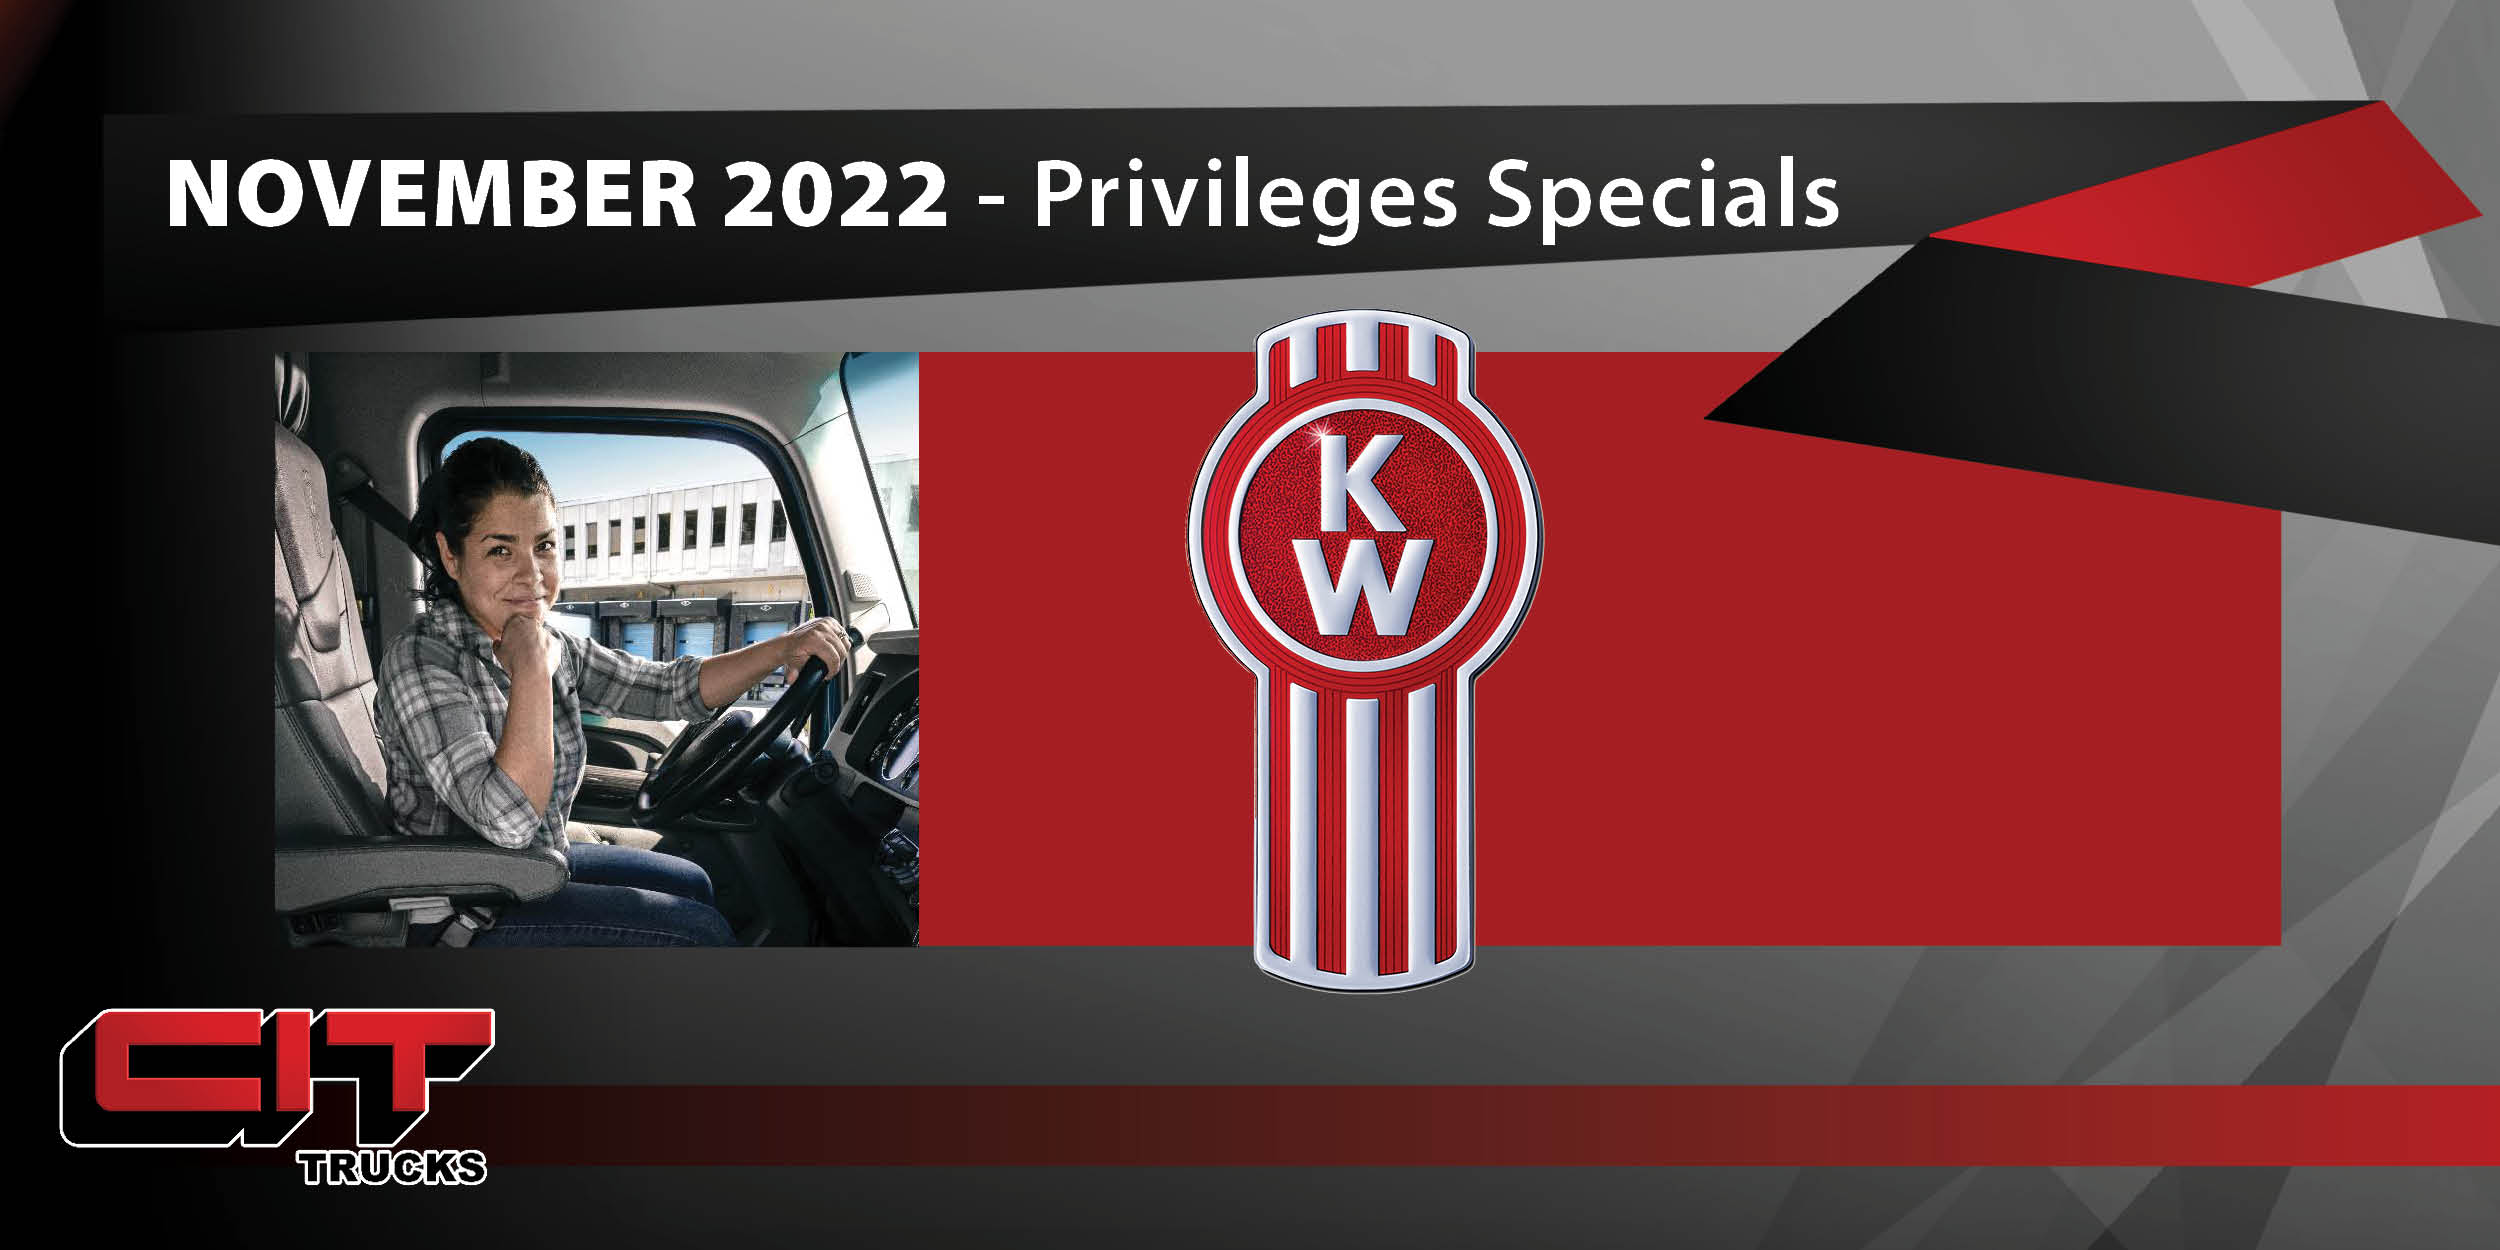 Kenworth Privileges Specials – November 2022